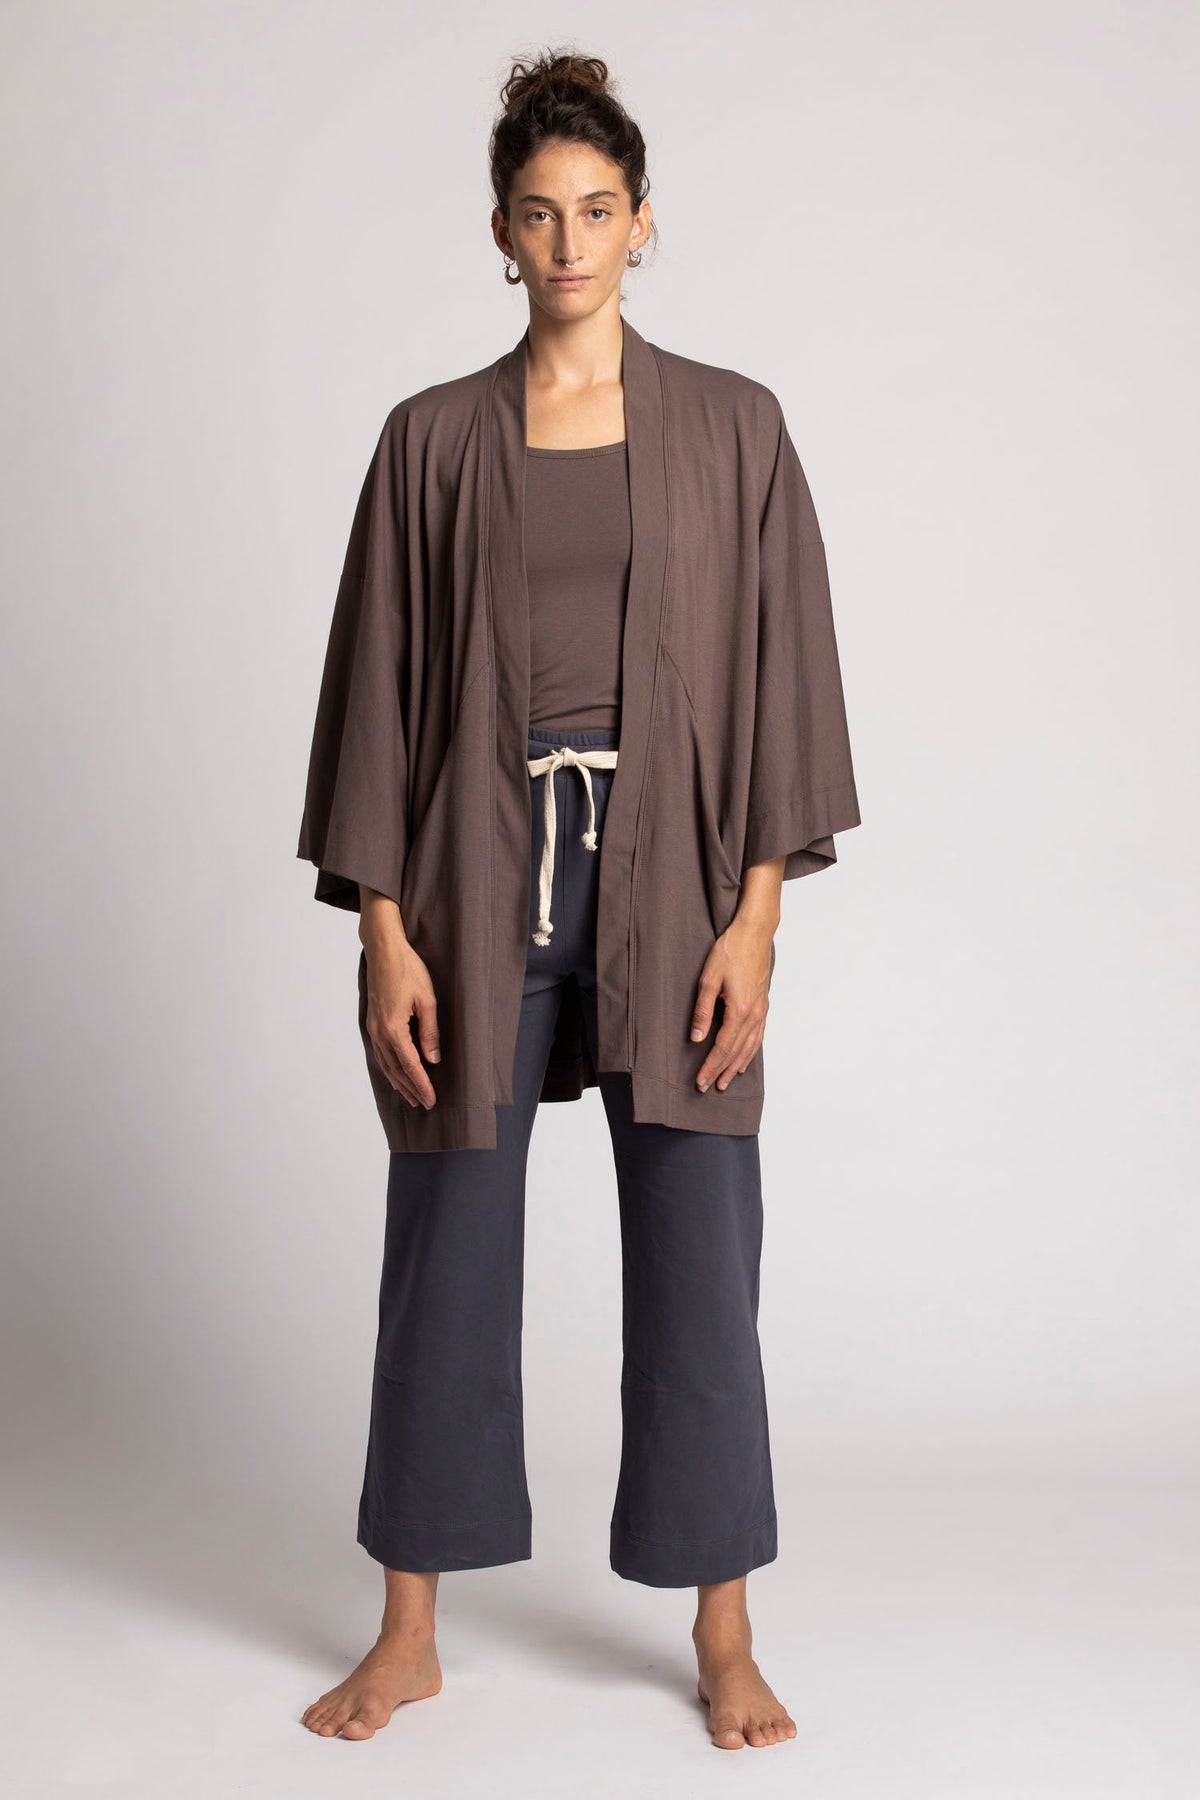 Soft Modal Lounge Kimono Cardigan womens clothing Ripple Yoga Wear 